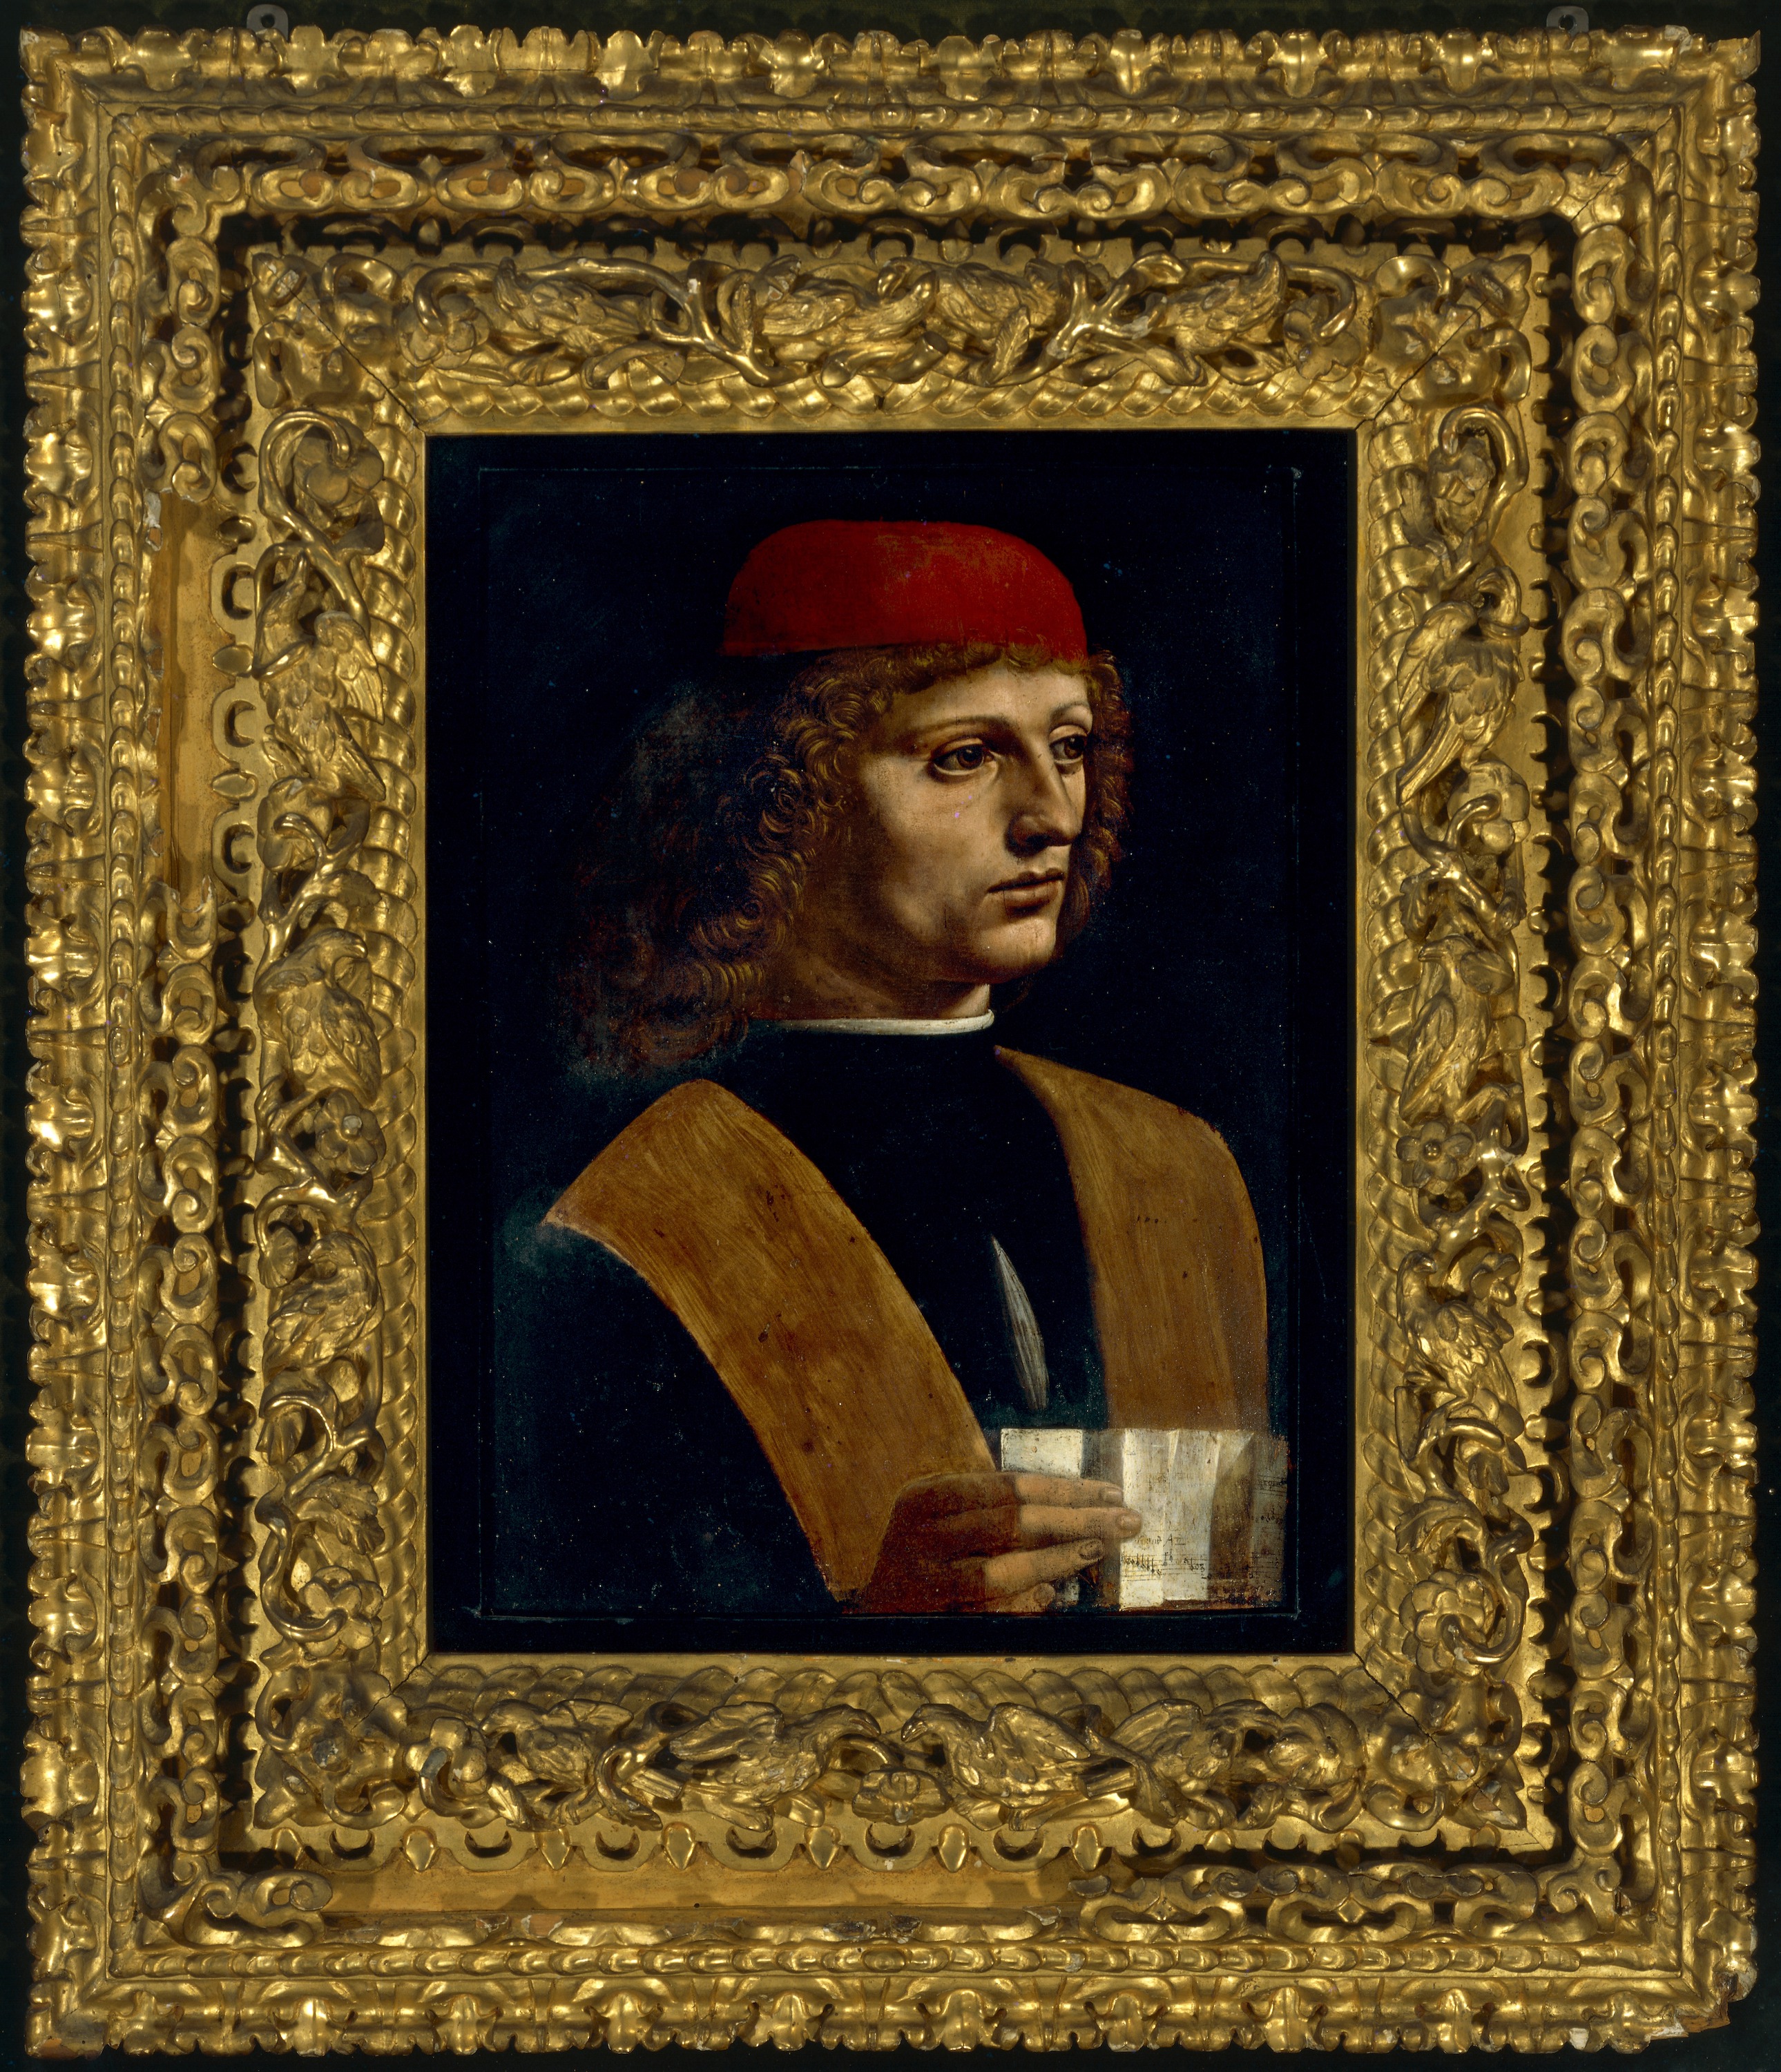 Portrait of a Musician by Leonardo da Vinci - c. 1483–1487 - 44.7 x 32 cm Pinacoteca Ambrosiana